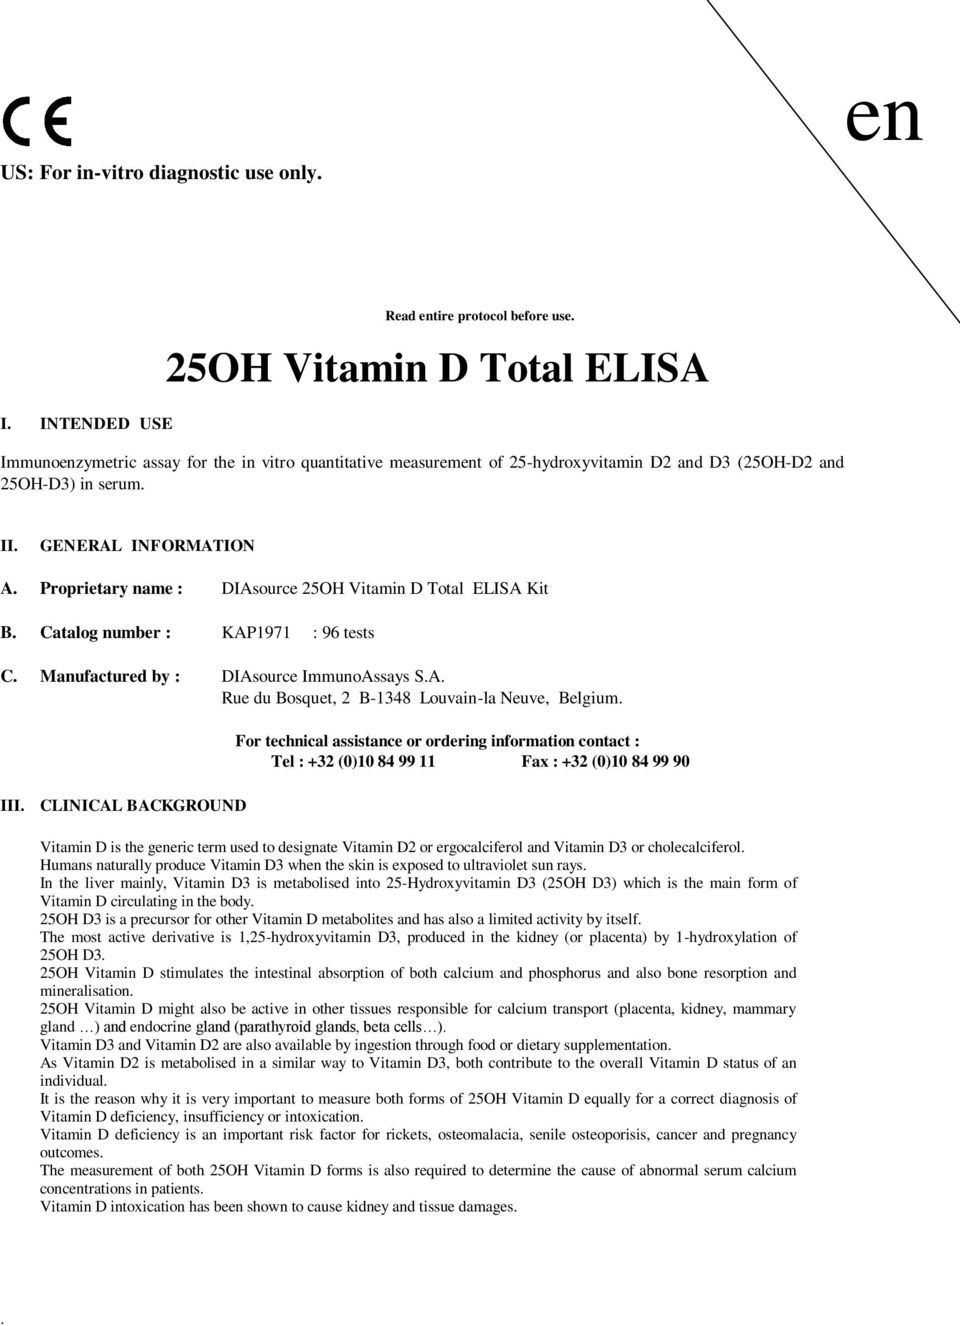 Proprietary name : DIAsource 25OH Vitamin D Total ELISA Kit B. Catalog number : KAP1971 : 96 tests C. Manufactured by : DIAsource ImmunoAssays S.A. Rue du Bosquet, 2 B-1348 Louvain-la Neuve, Belgium.